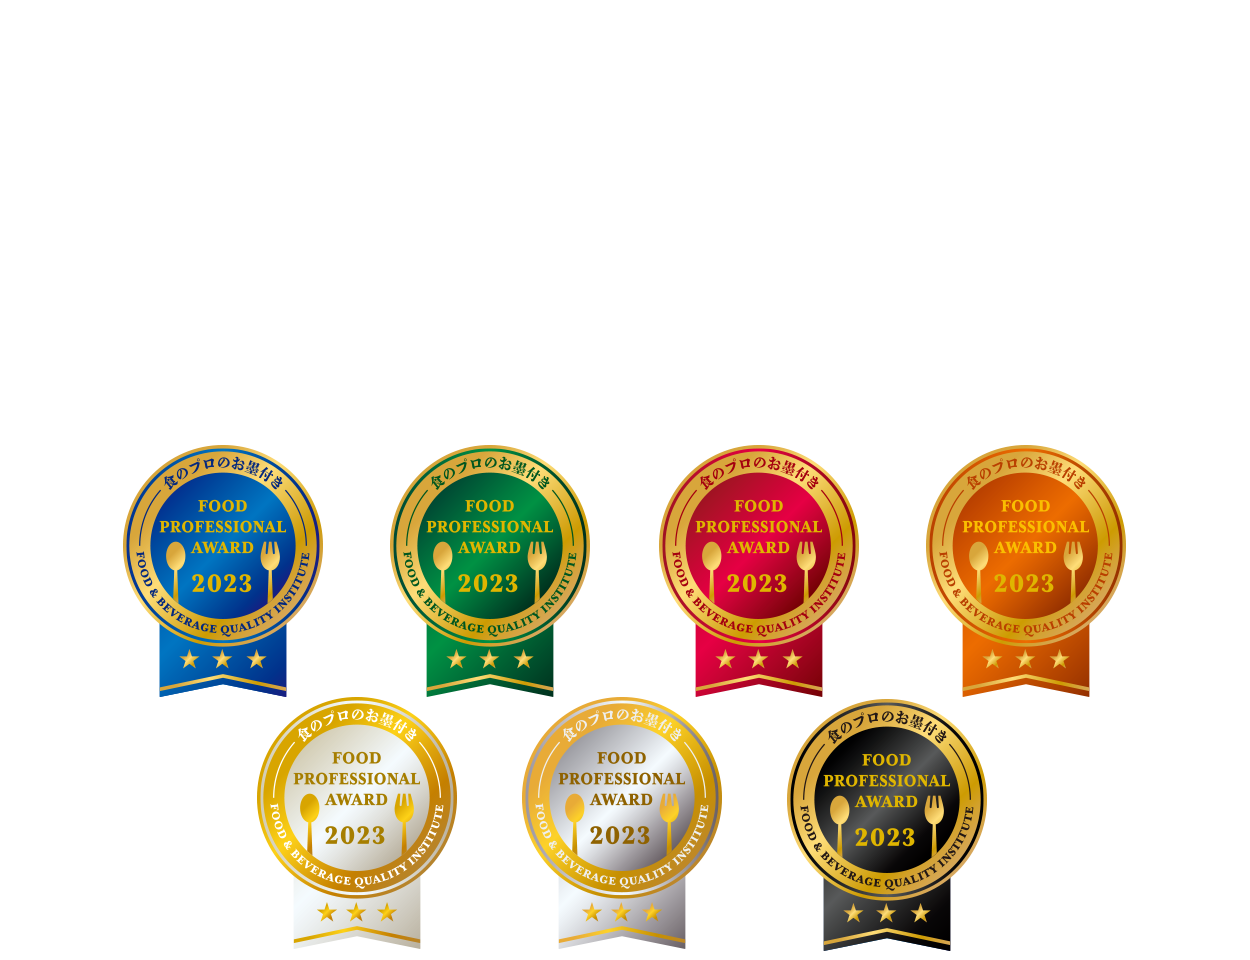 FOOD PROFESSIONAL AWARD – 食のプロが食品、飲料、飲食店メニューを審査する品評機関